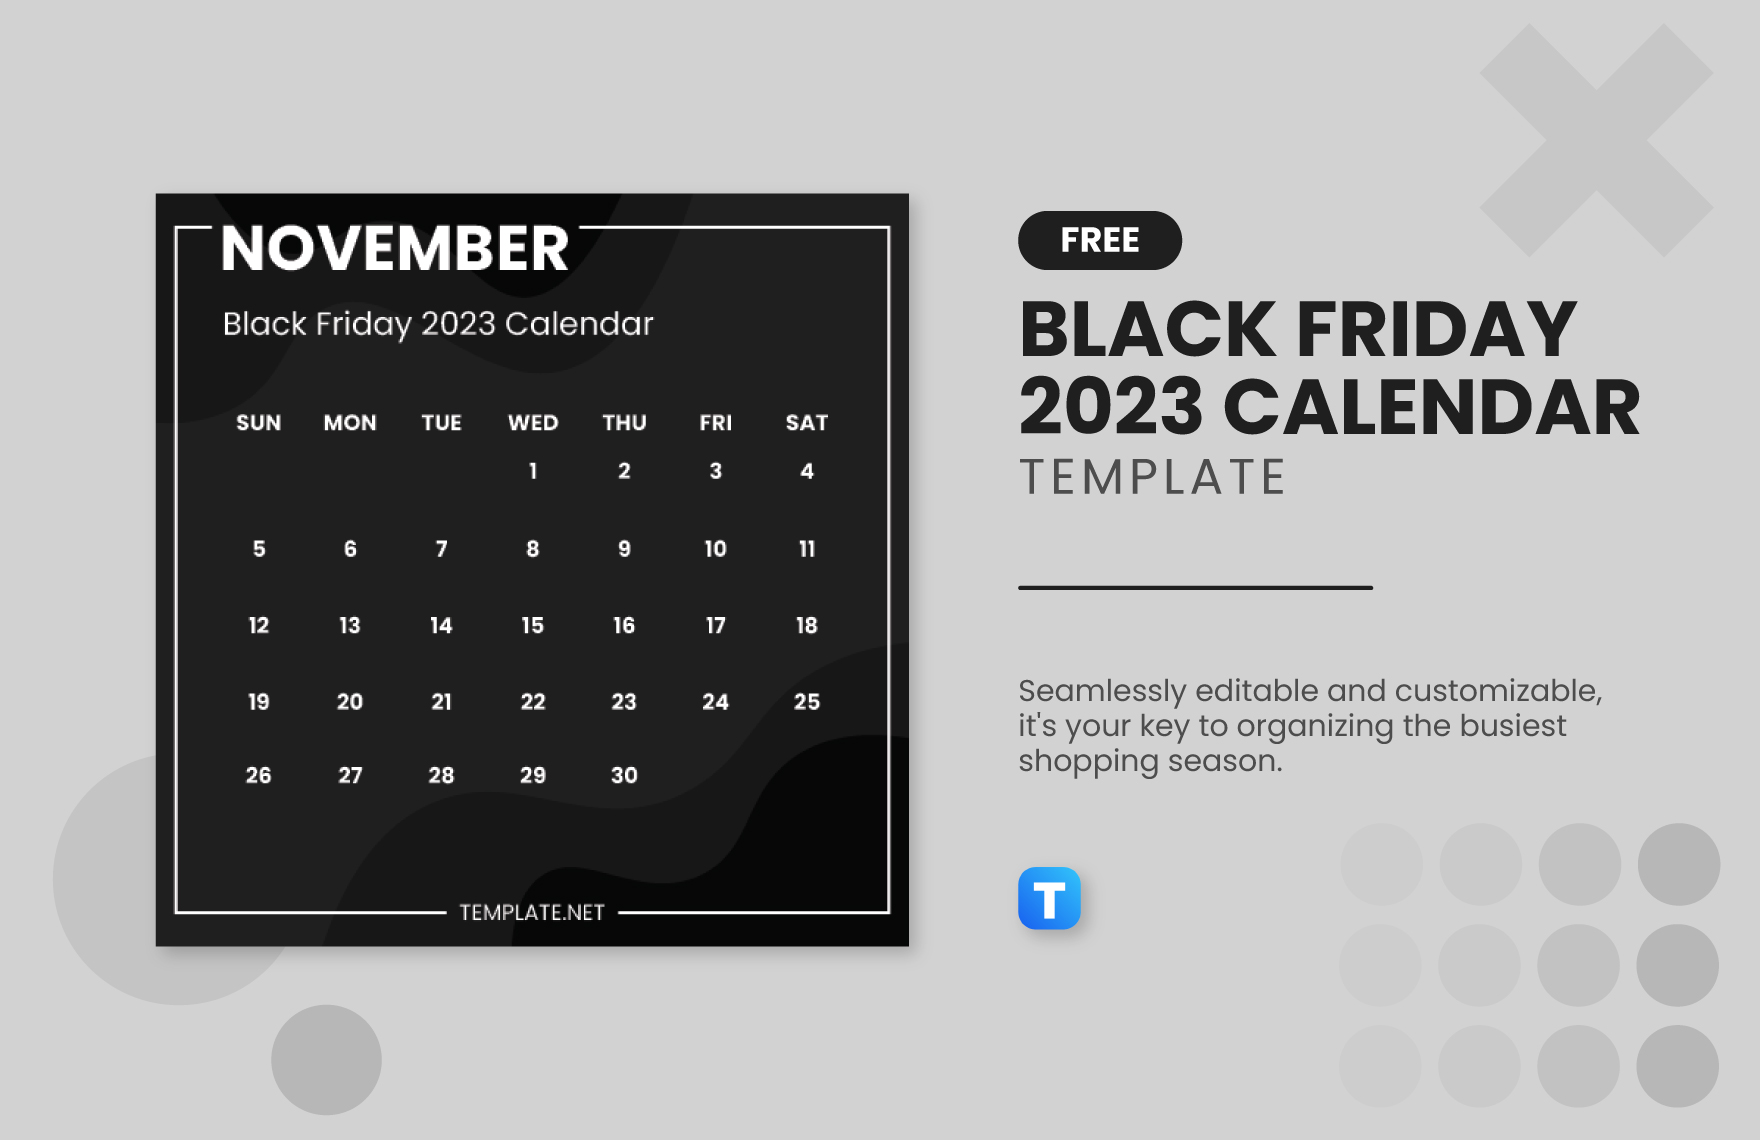 Free Black Friday 2023 Calendar Template